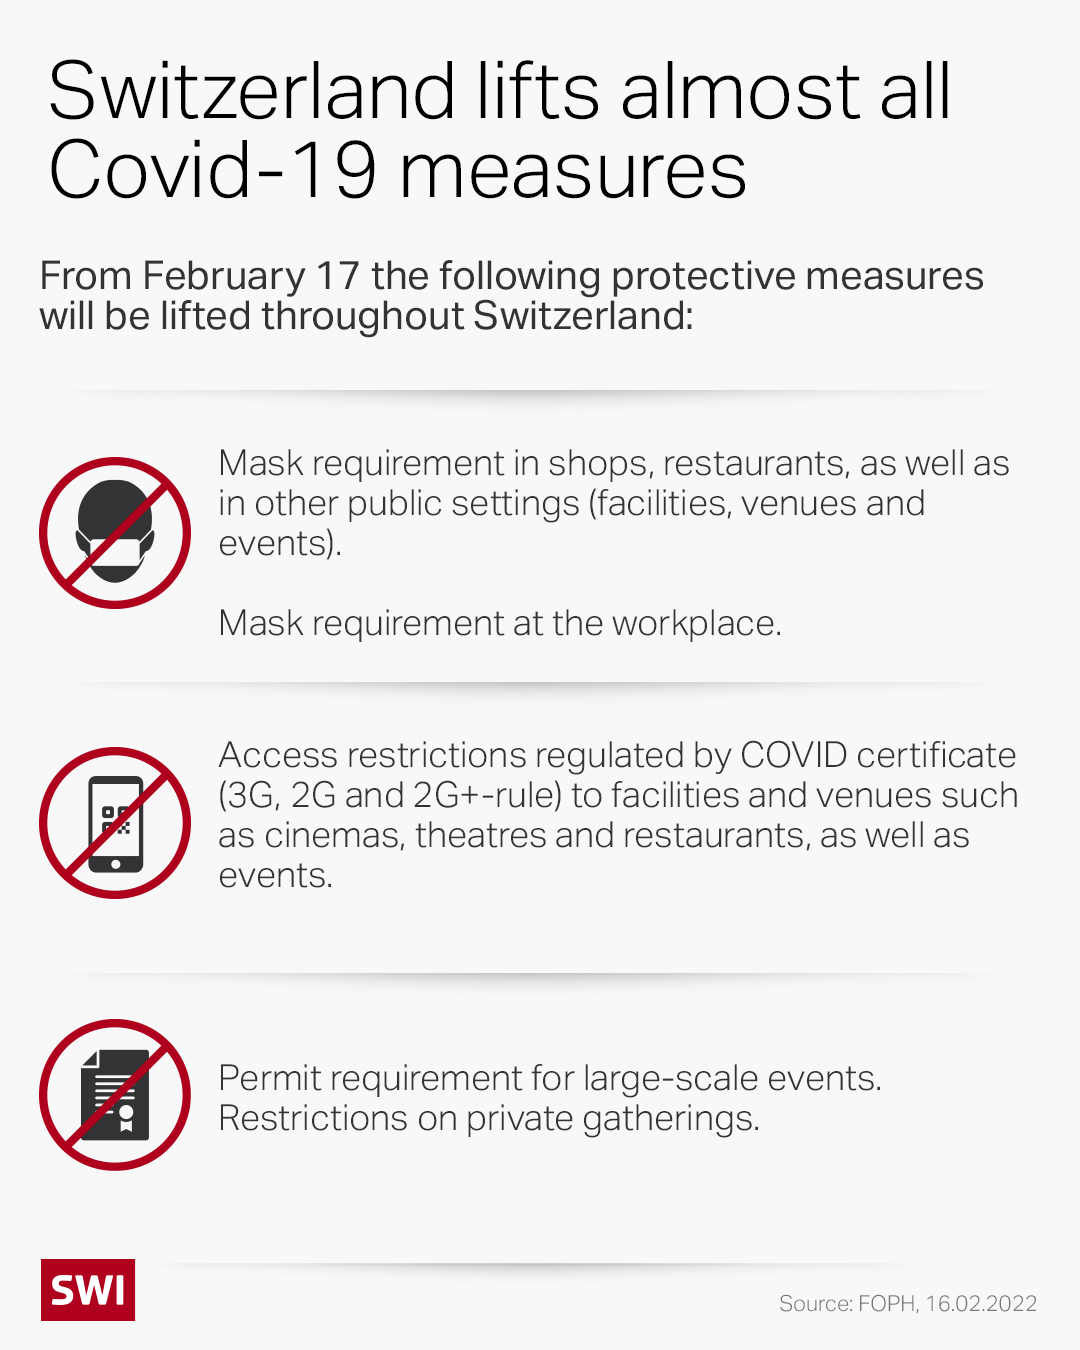 Covid measures